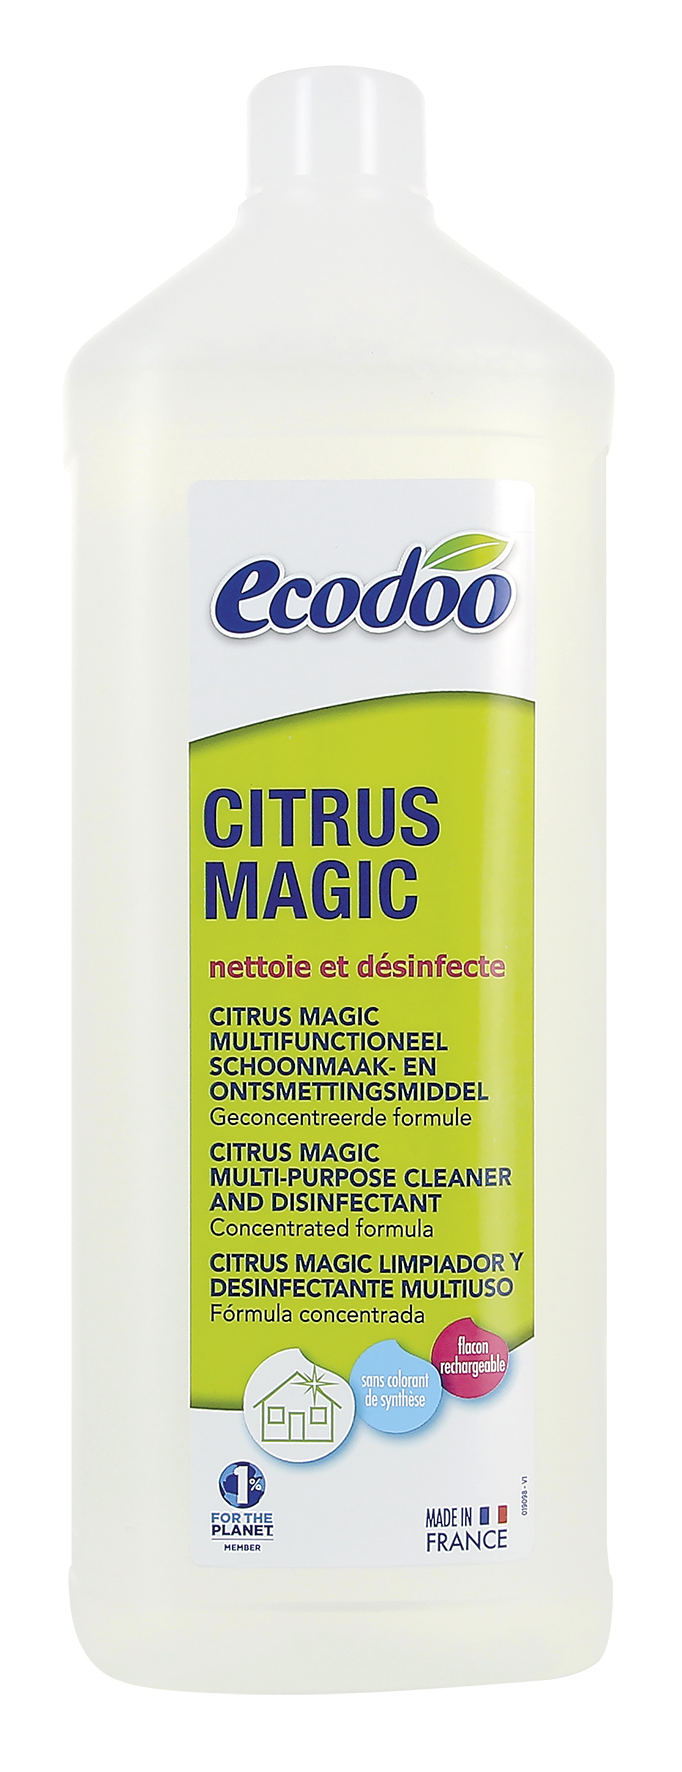 Ecodoo Citrus Magic Recharge Nettoyant 1 L